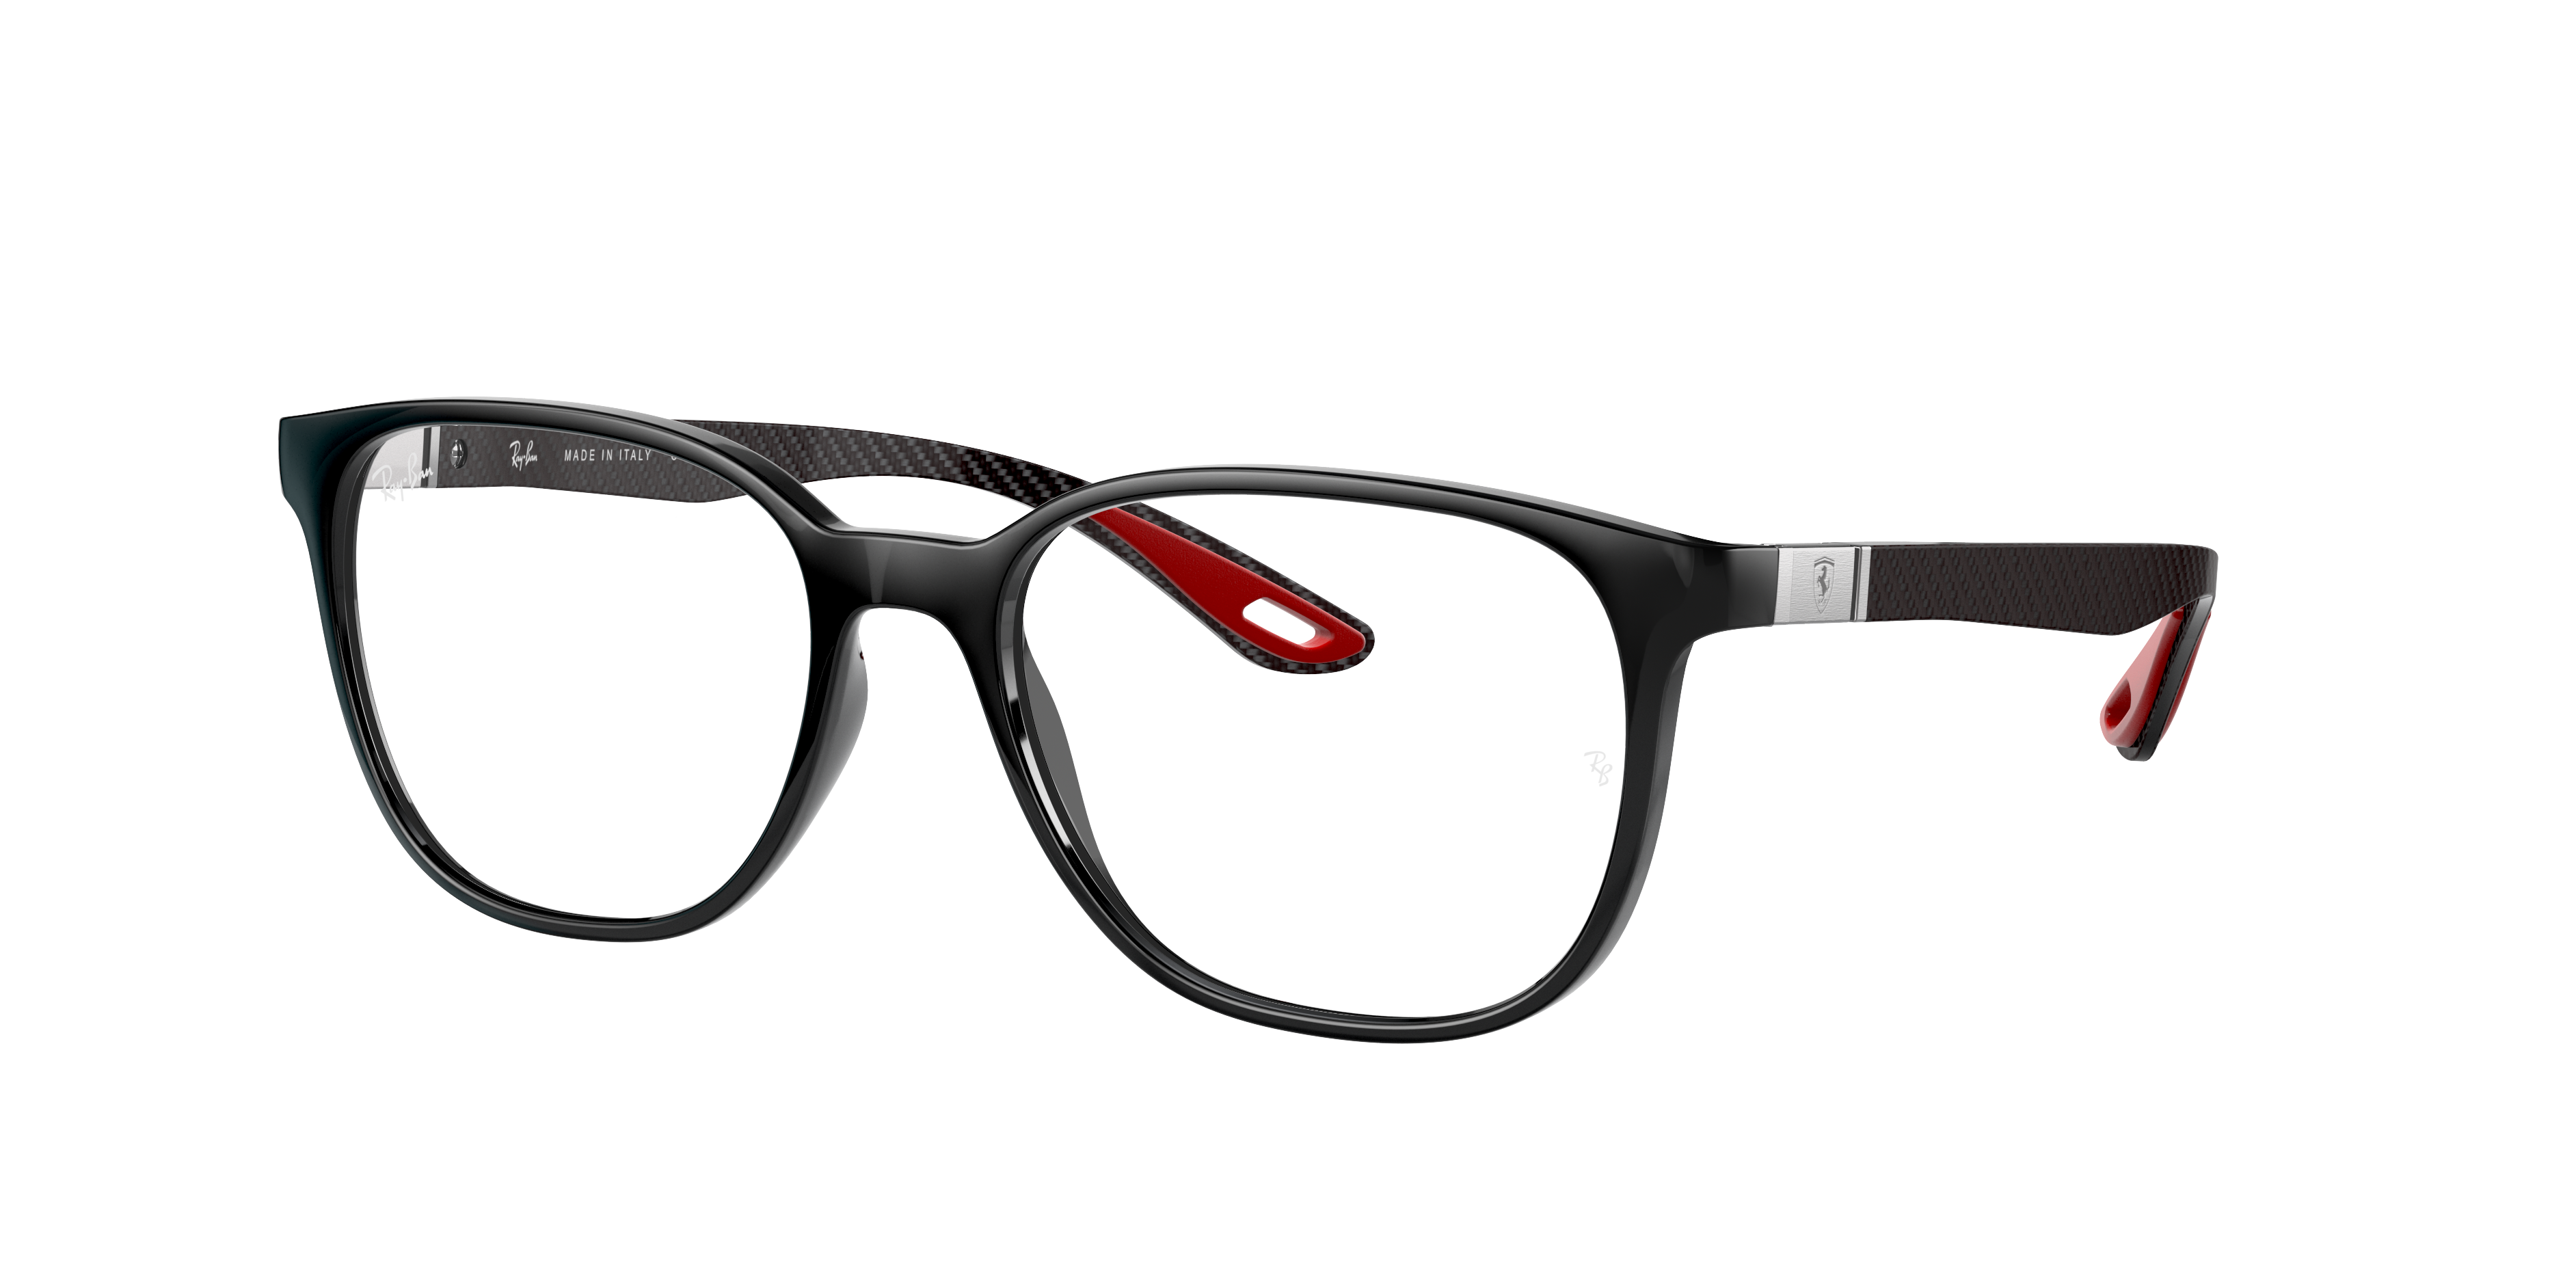 Ray Ban Rb8907m Scuderia Ferrari Collection Eyeglasses Black Frame Clear Lenses Polarized 53-17